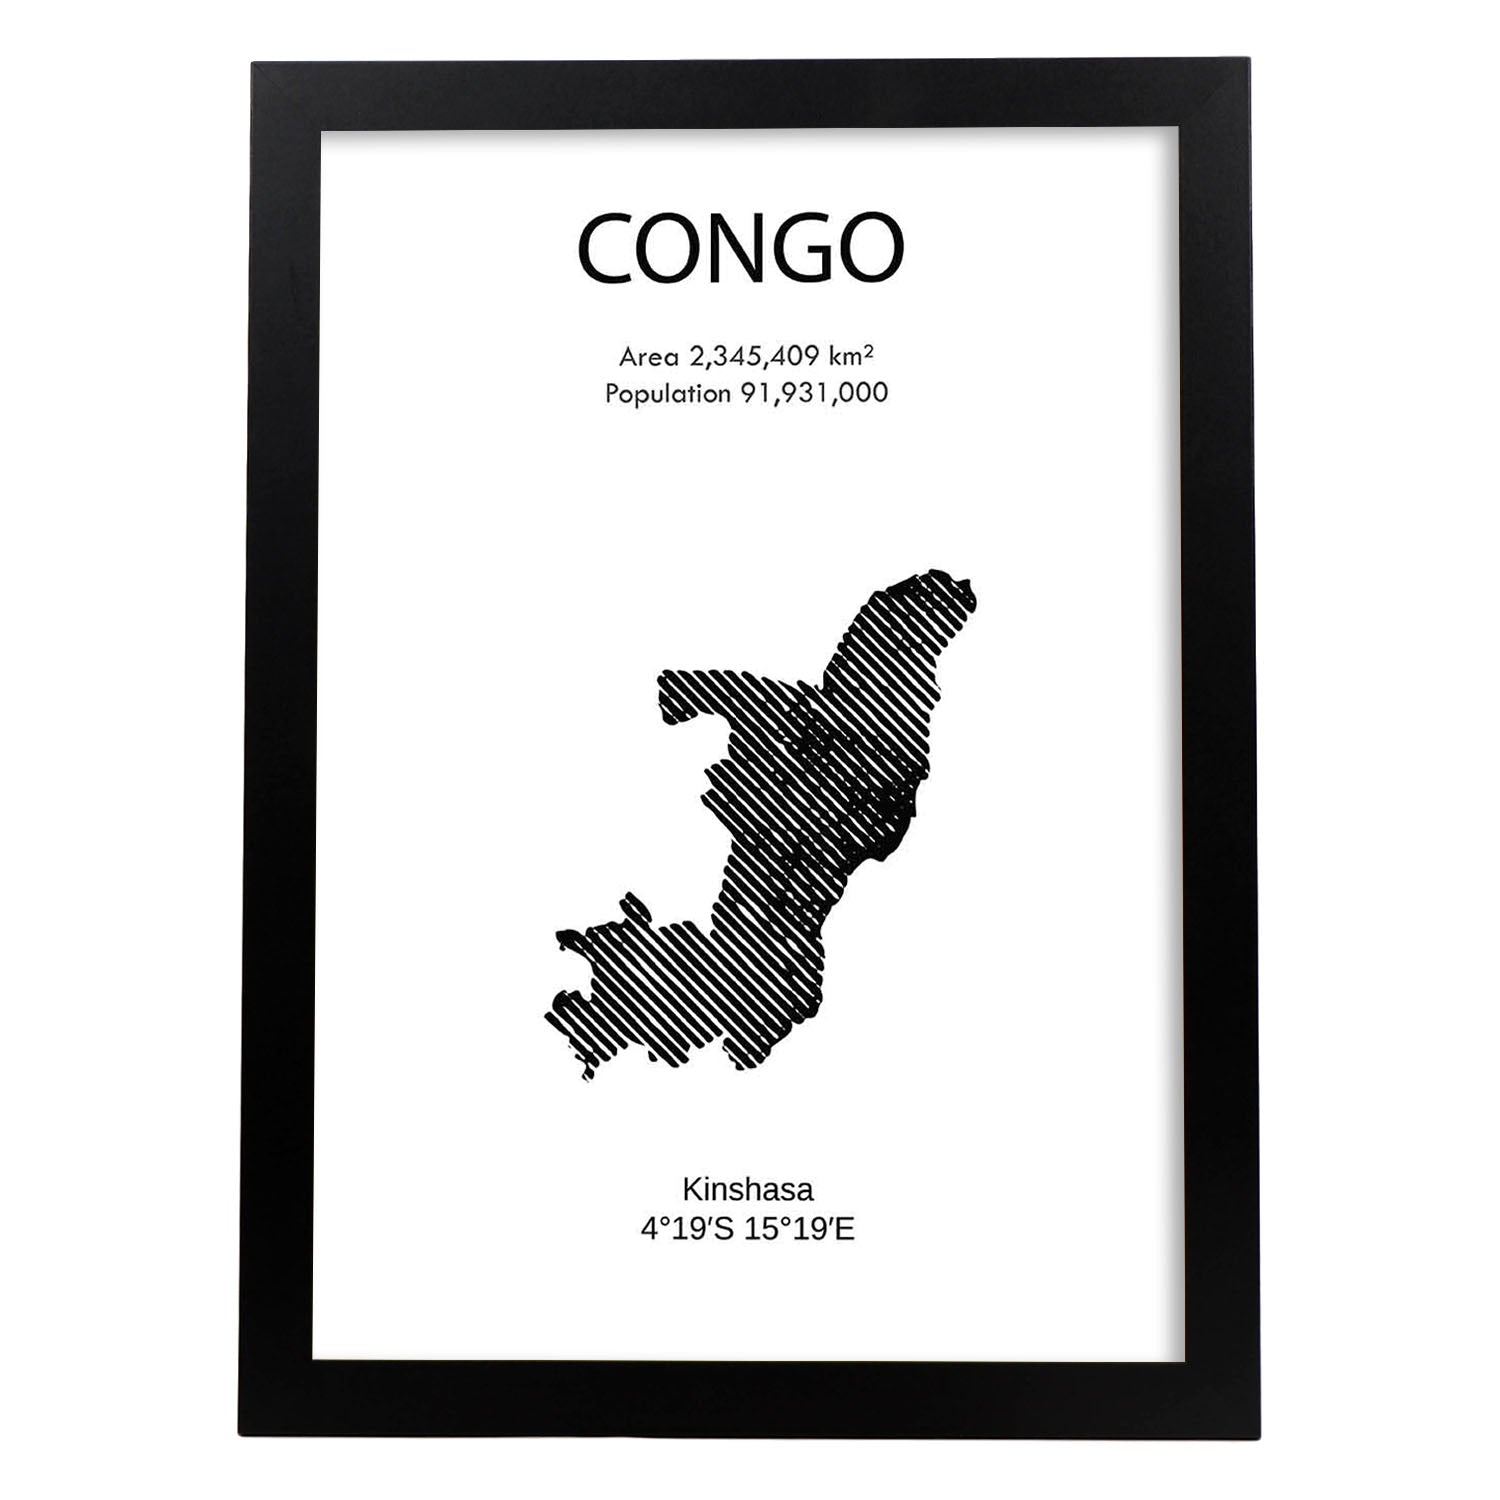 Poster de Congo. Láminas de paises y continentes del mundo.-Artwork-Nacnic-A3-Marco Negro-Nacnic Estudio SL